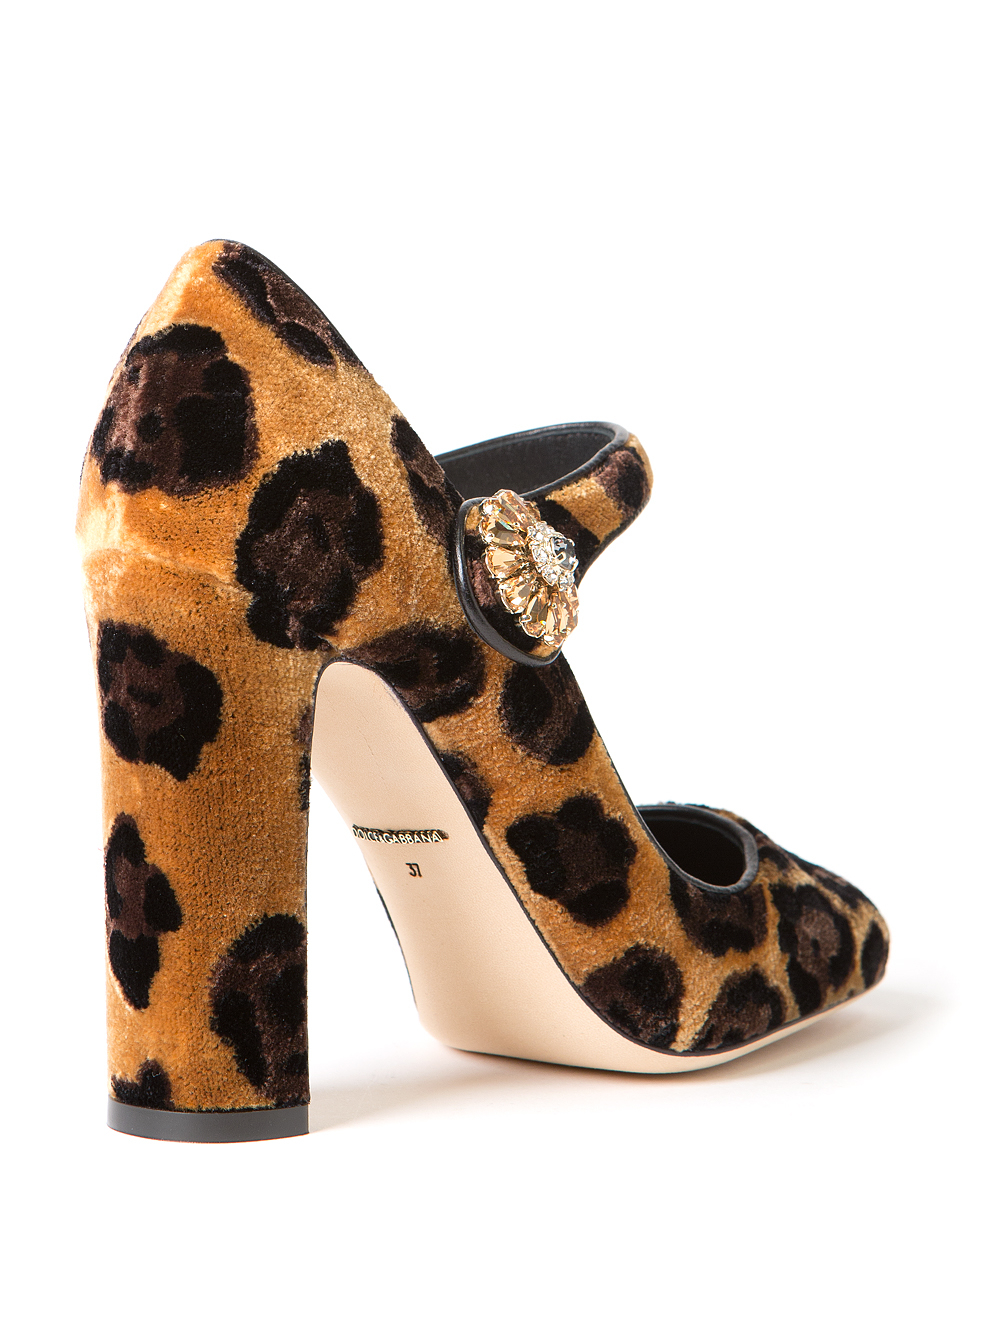 Lyst - Dolce & Gabbana Leopard Velvet Mary Jane Pumps in Brown